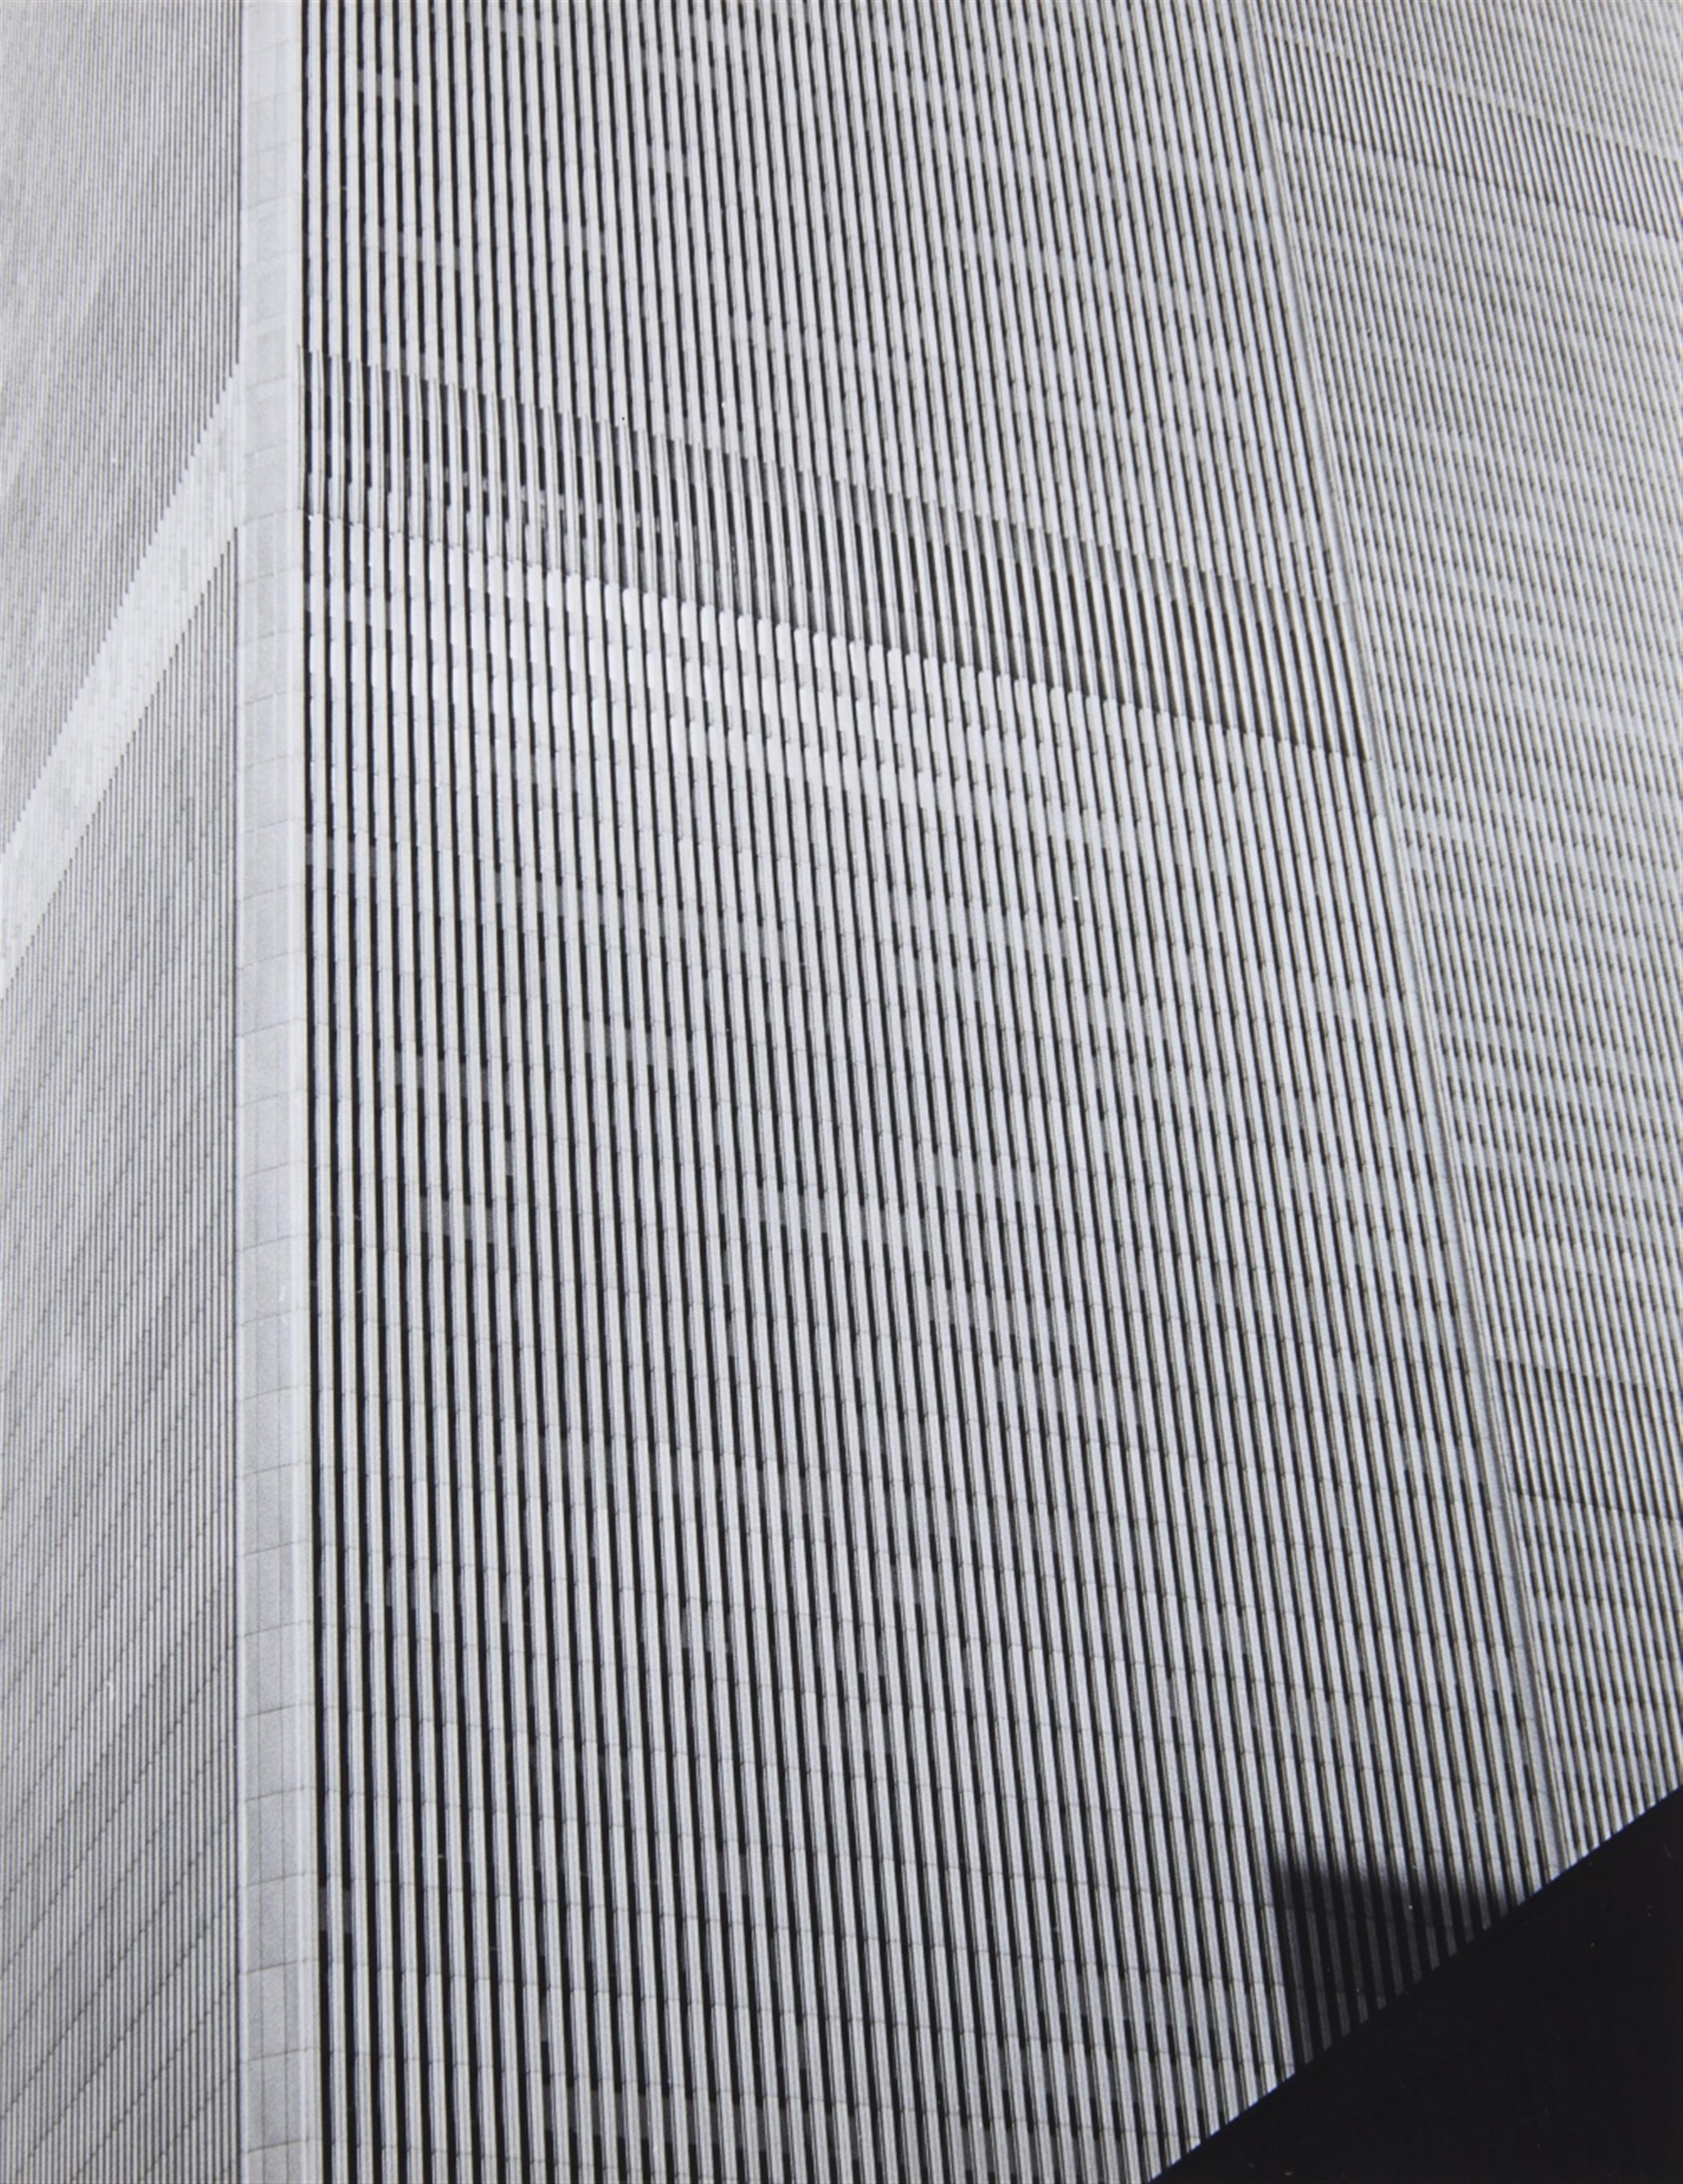 Andreas Feininger - Ohne Titel - image-1